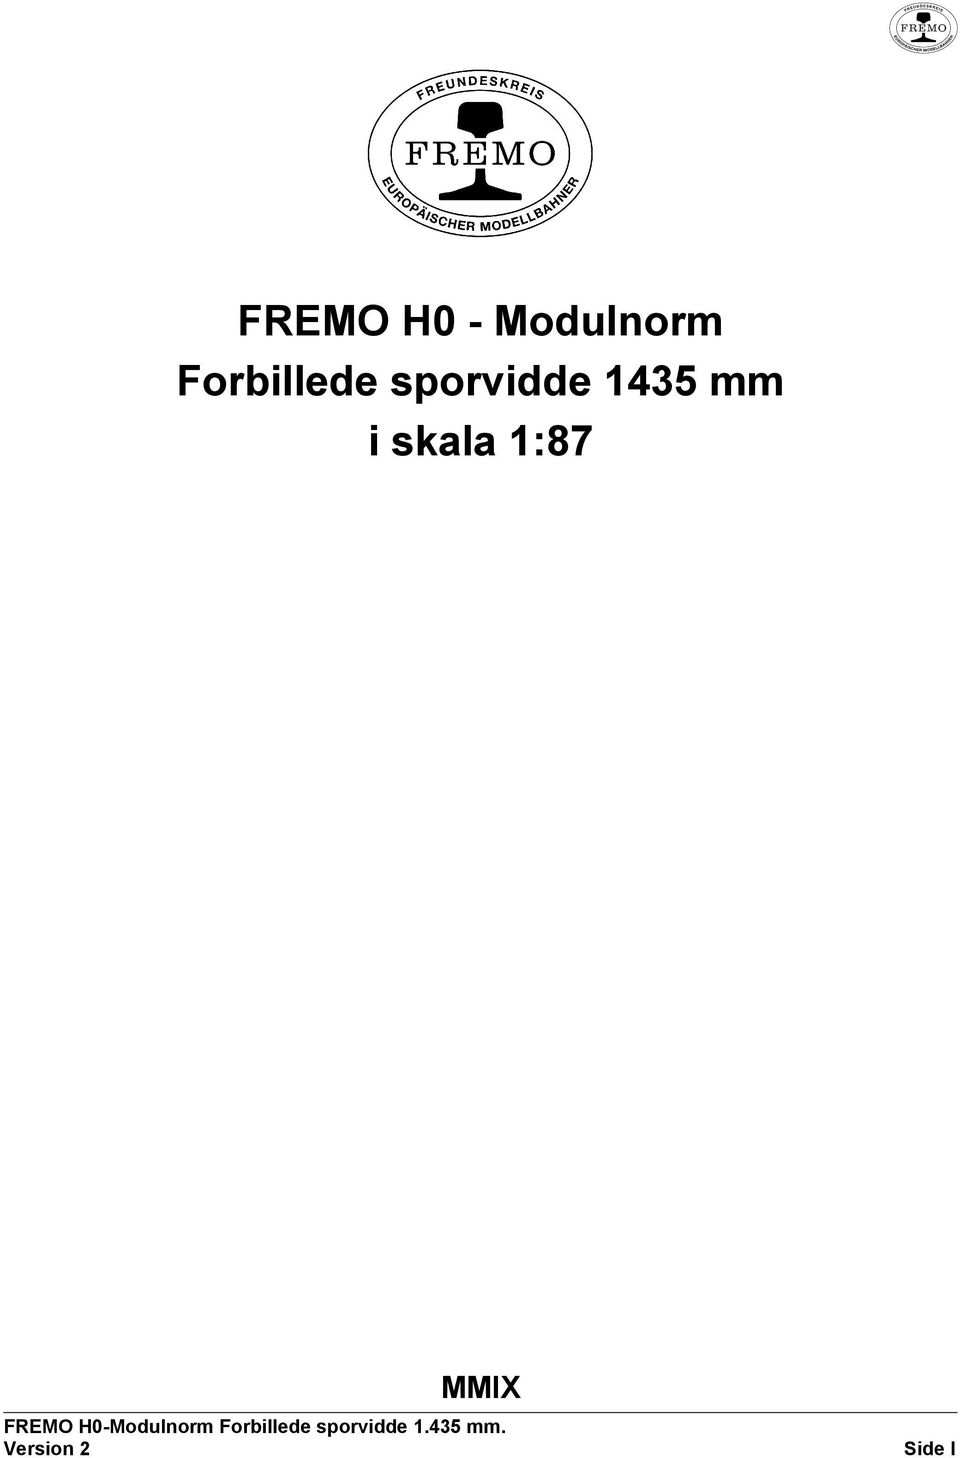 MMIX FREMO H0-Modulnorm